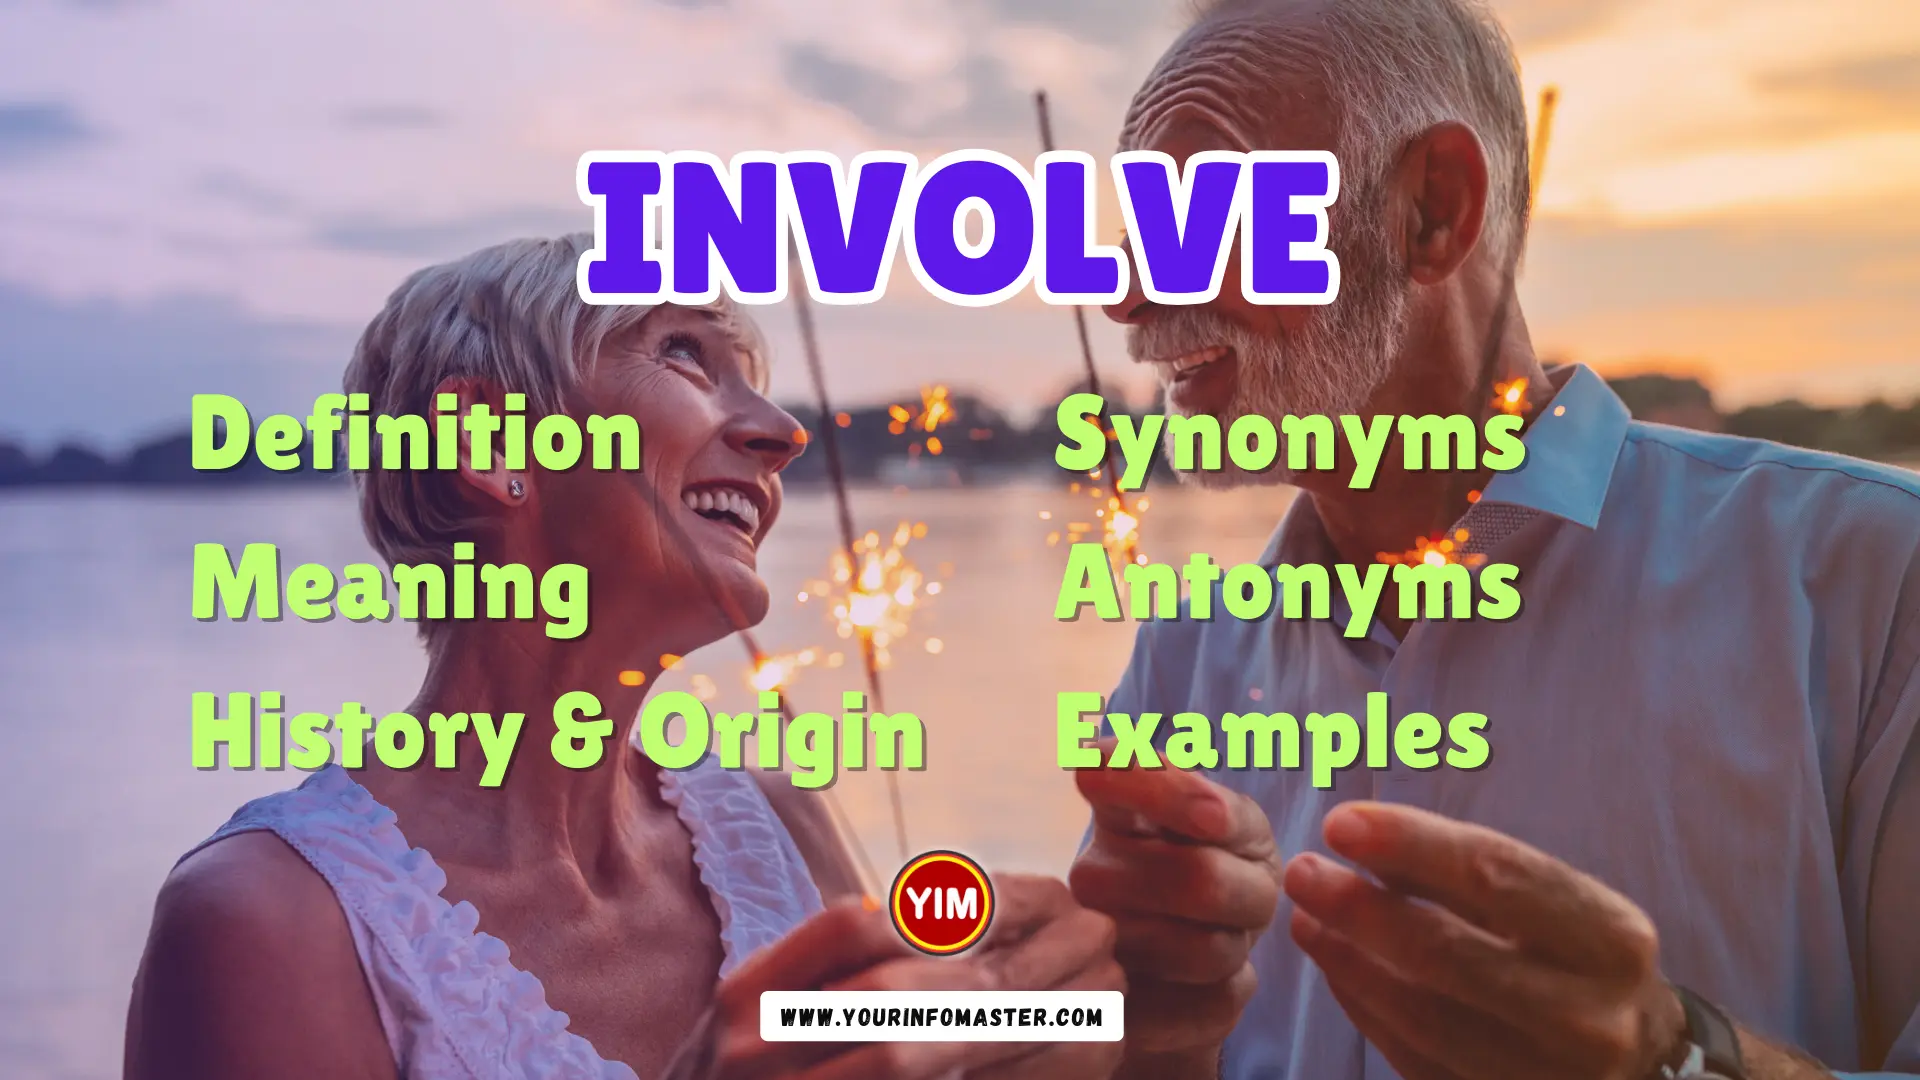 Involve Synonyms, Antonyms, Example Sentences